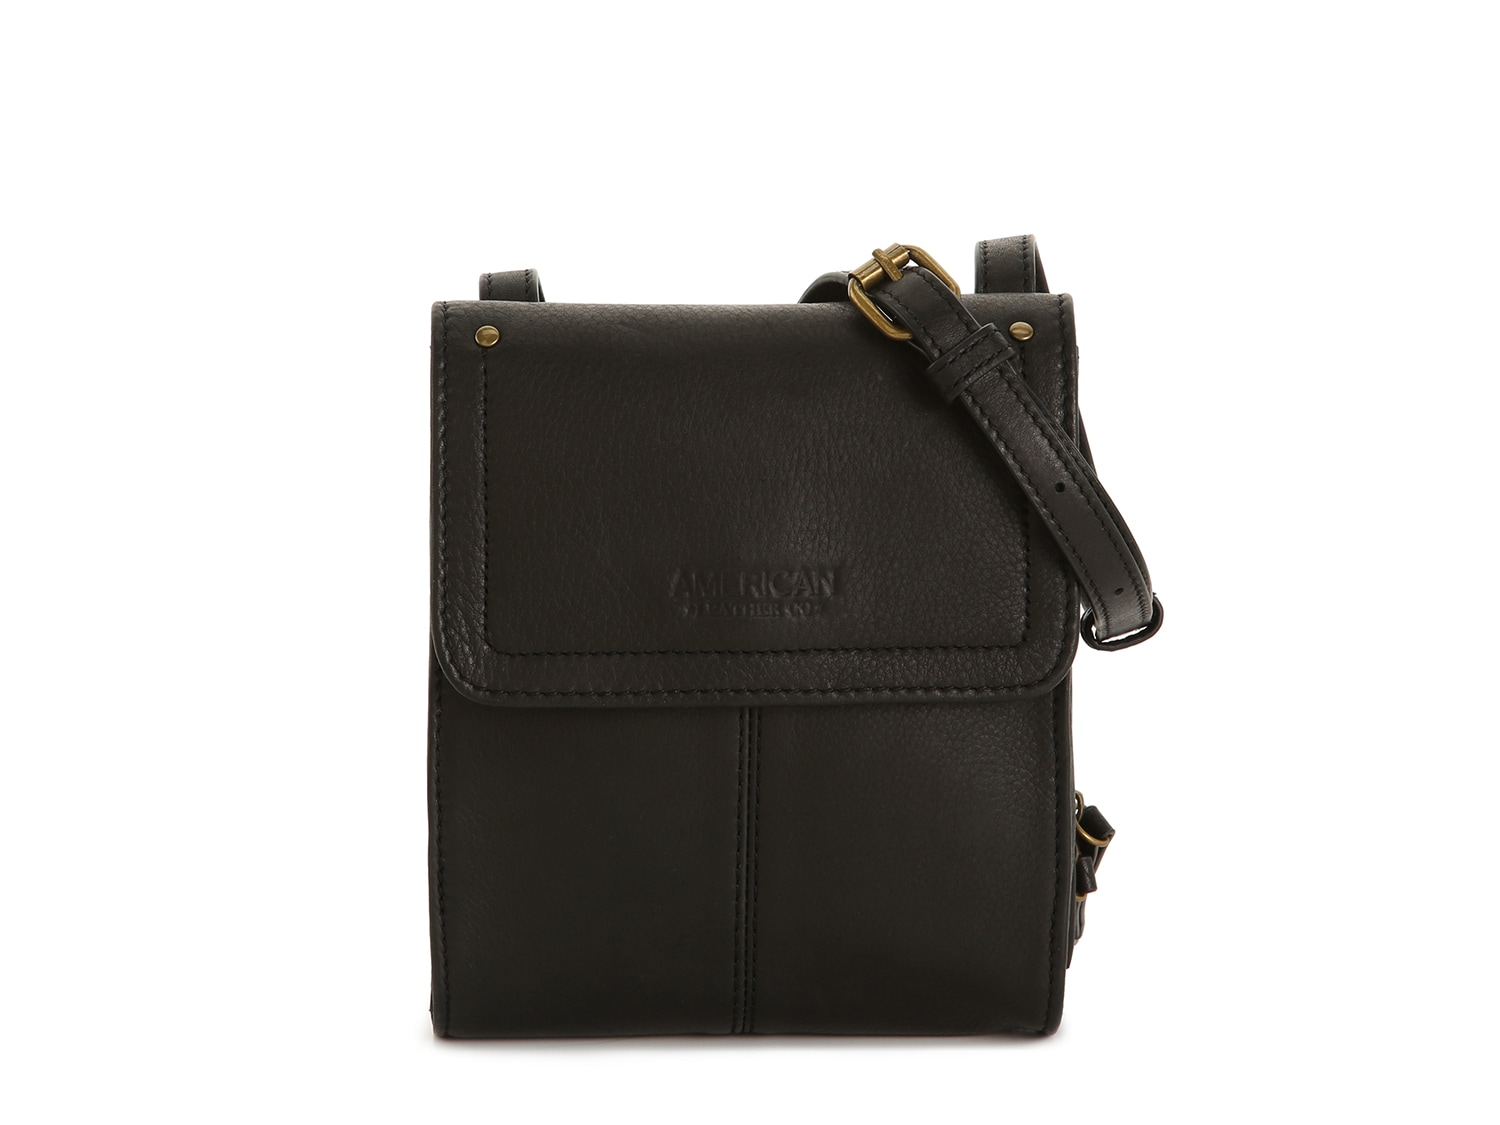 American Leather Co. Kansas Leather Crossbody Bag - Free